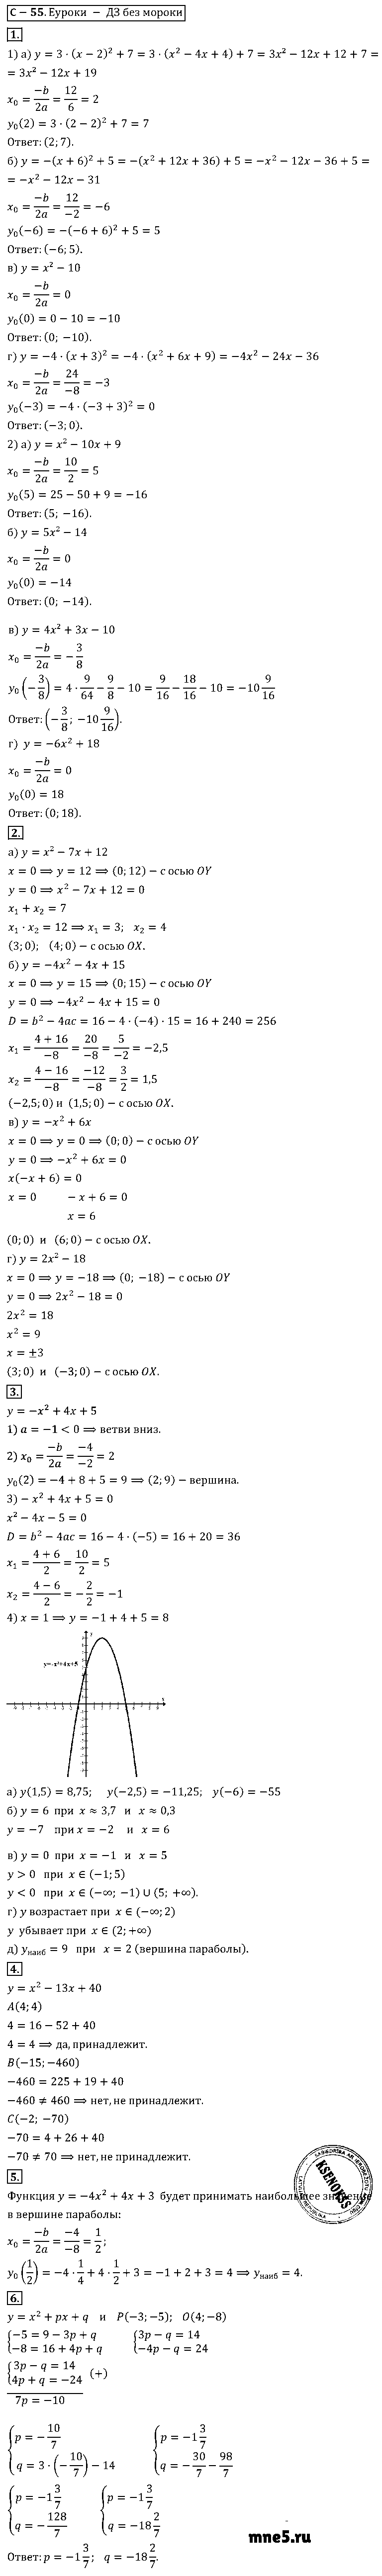 ГДЗ Алгебра 8 класс - С-55(с). График функции y = ax²+bx+c